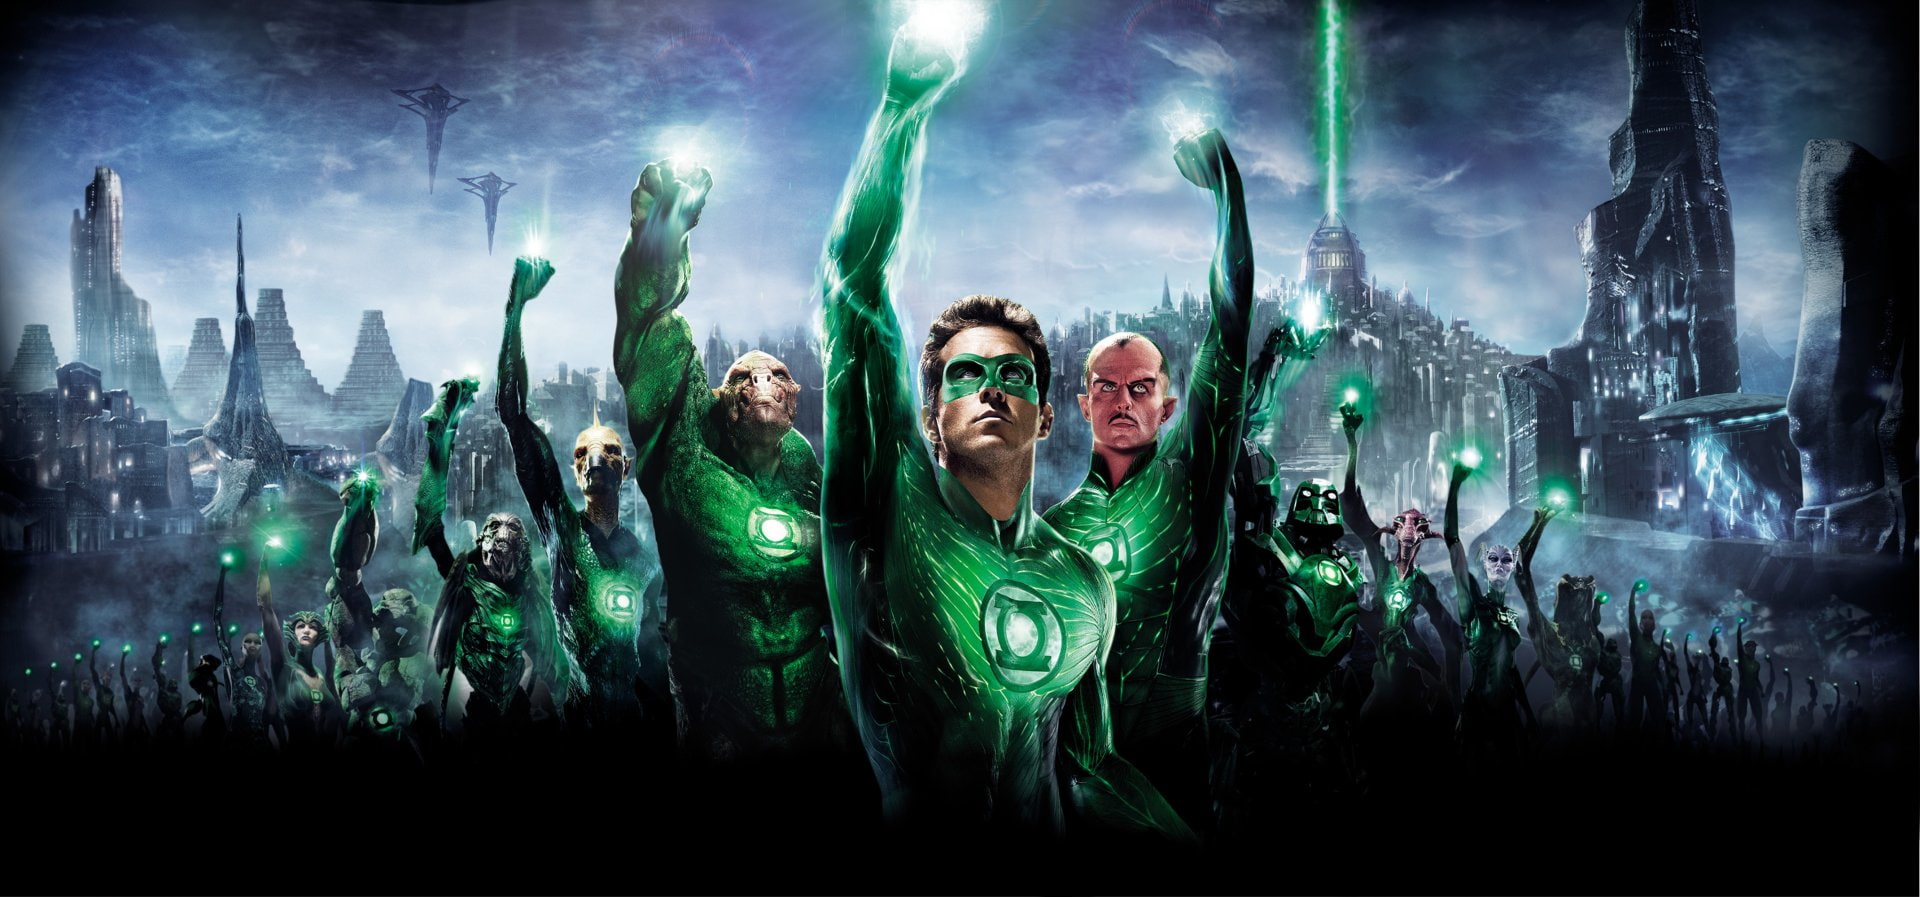 Green Lantern, Kilowog (Green Lantern), Ryan Reynolds, Sinestro